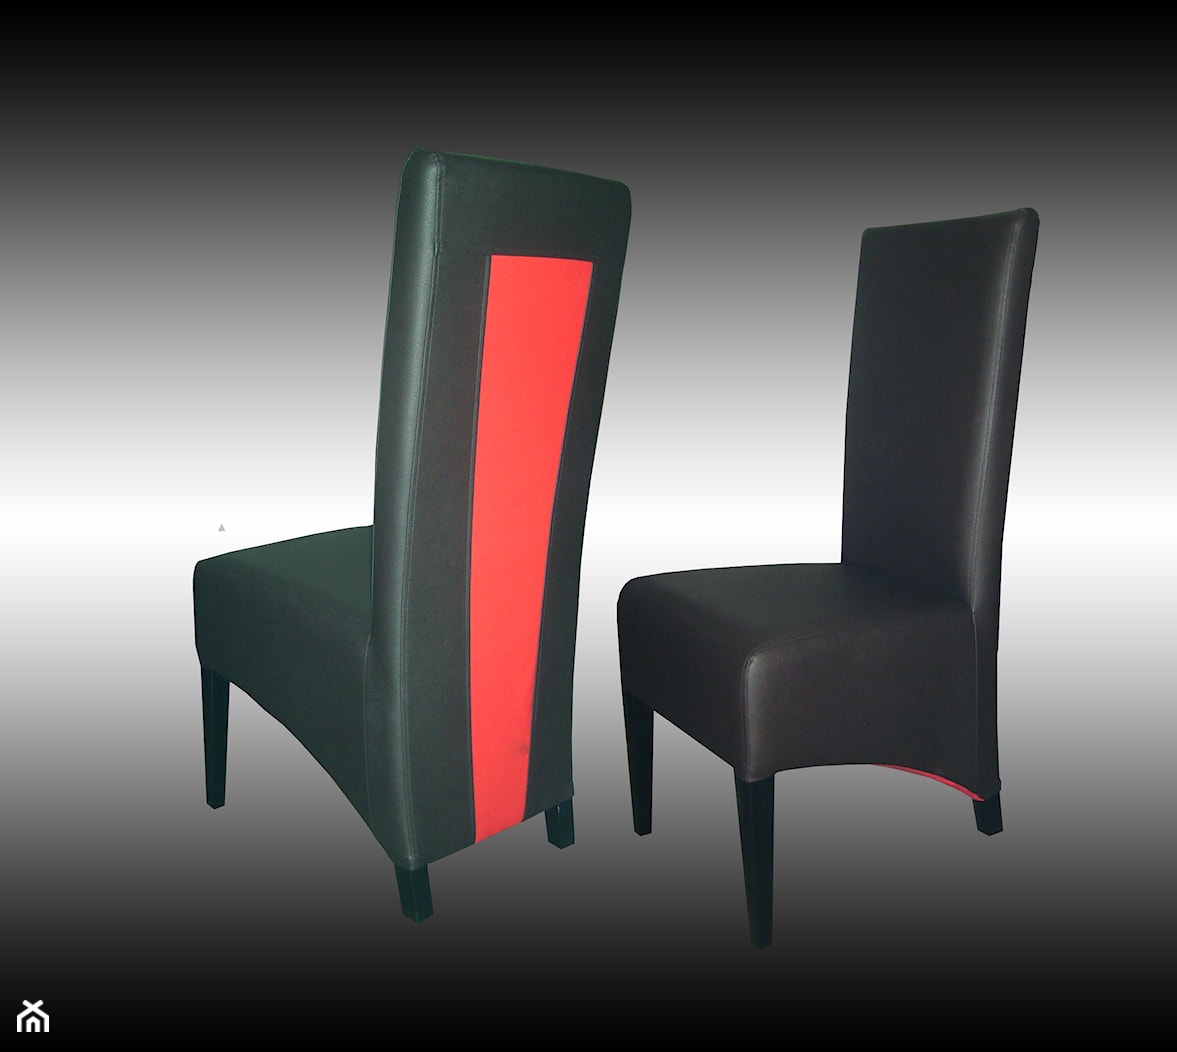 Krzesła New Desing 155 zł - zdjęcie od marcello_meble1 - Homebook